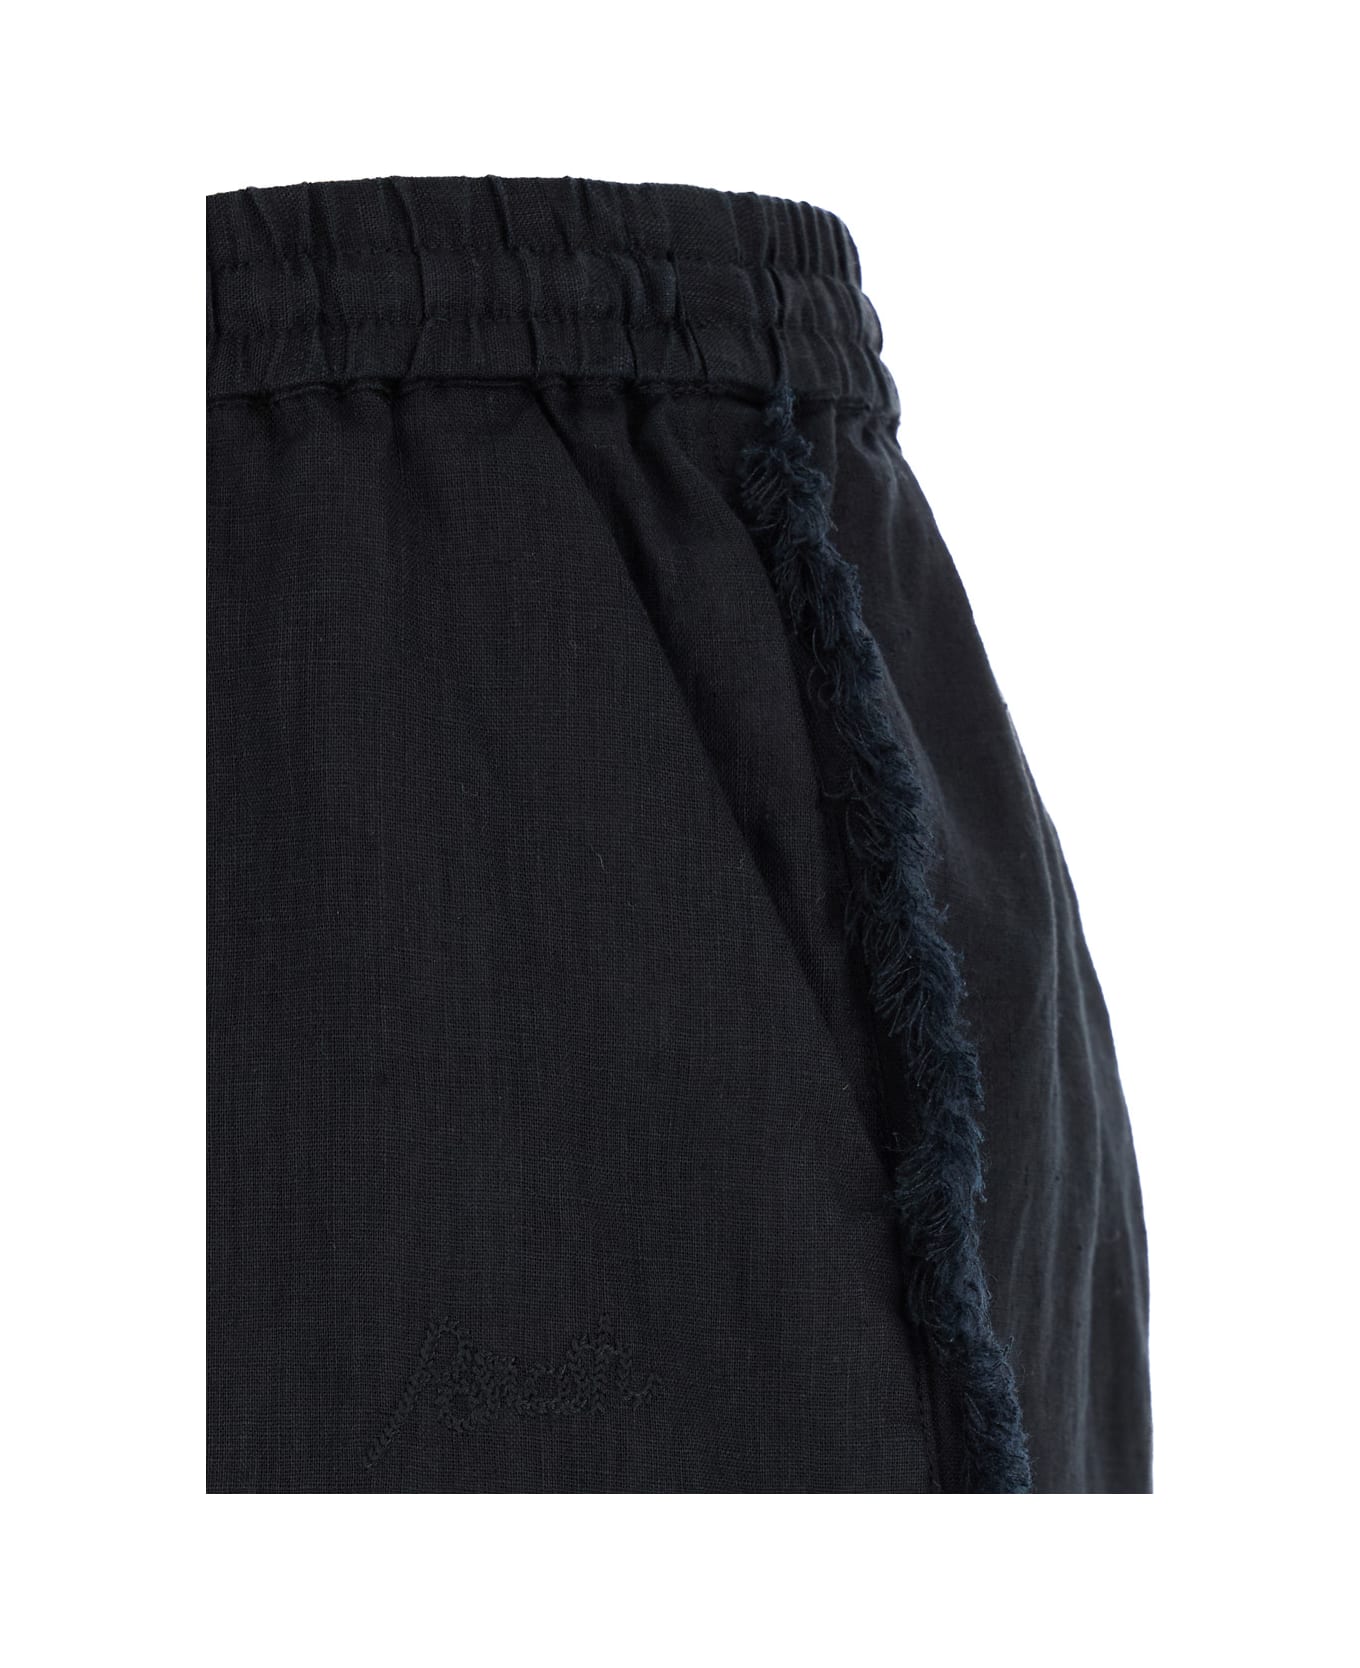 Parosh Black Shorts With Drawstring And Fringed Hem In Linen Woman - NERO